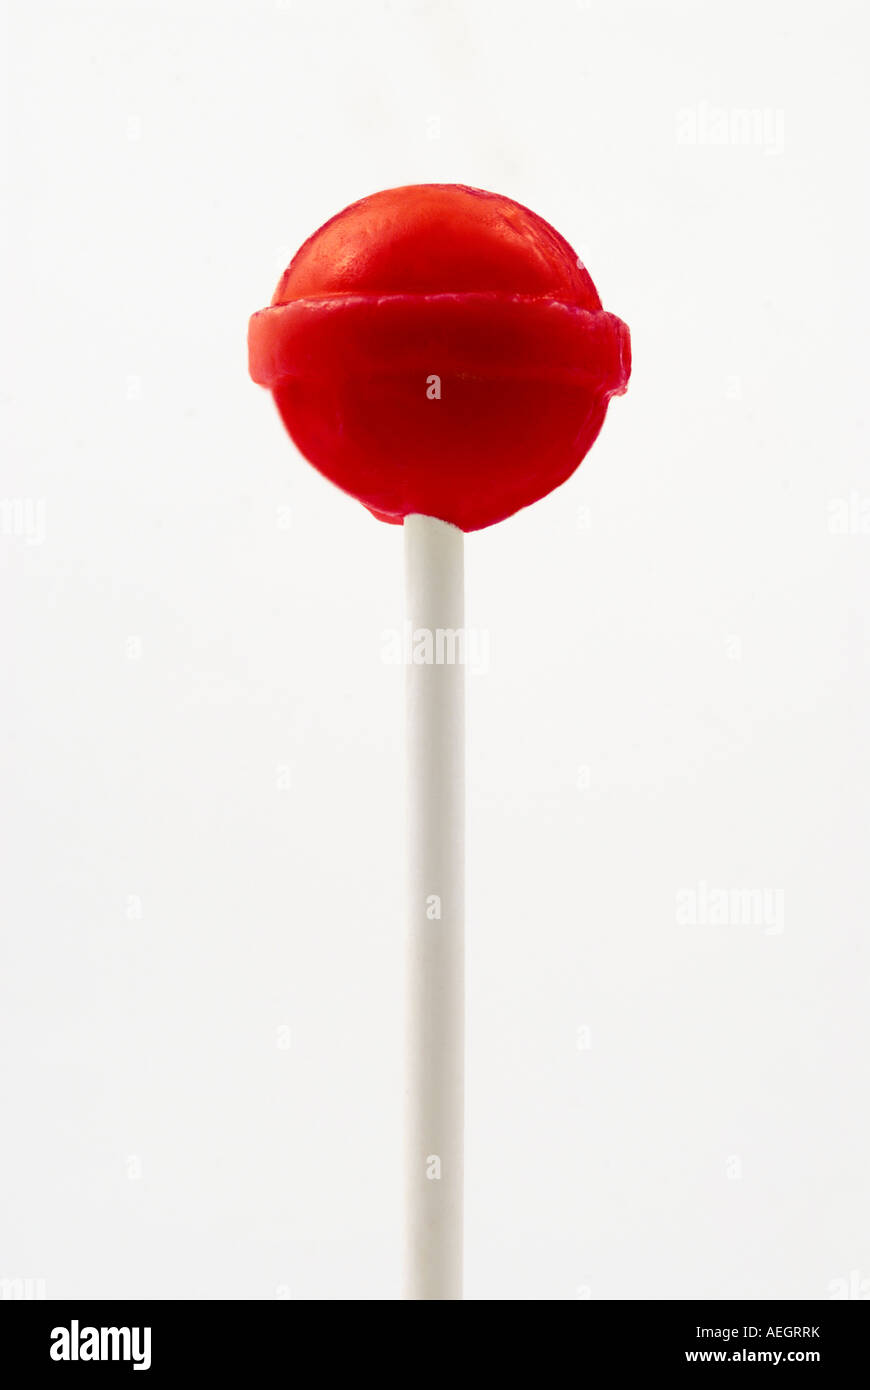 Download Roblox Aesthetic Girl With Lollipop Wallpaper